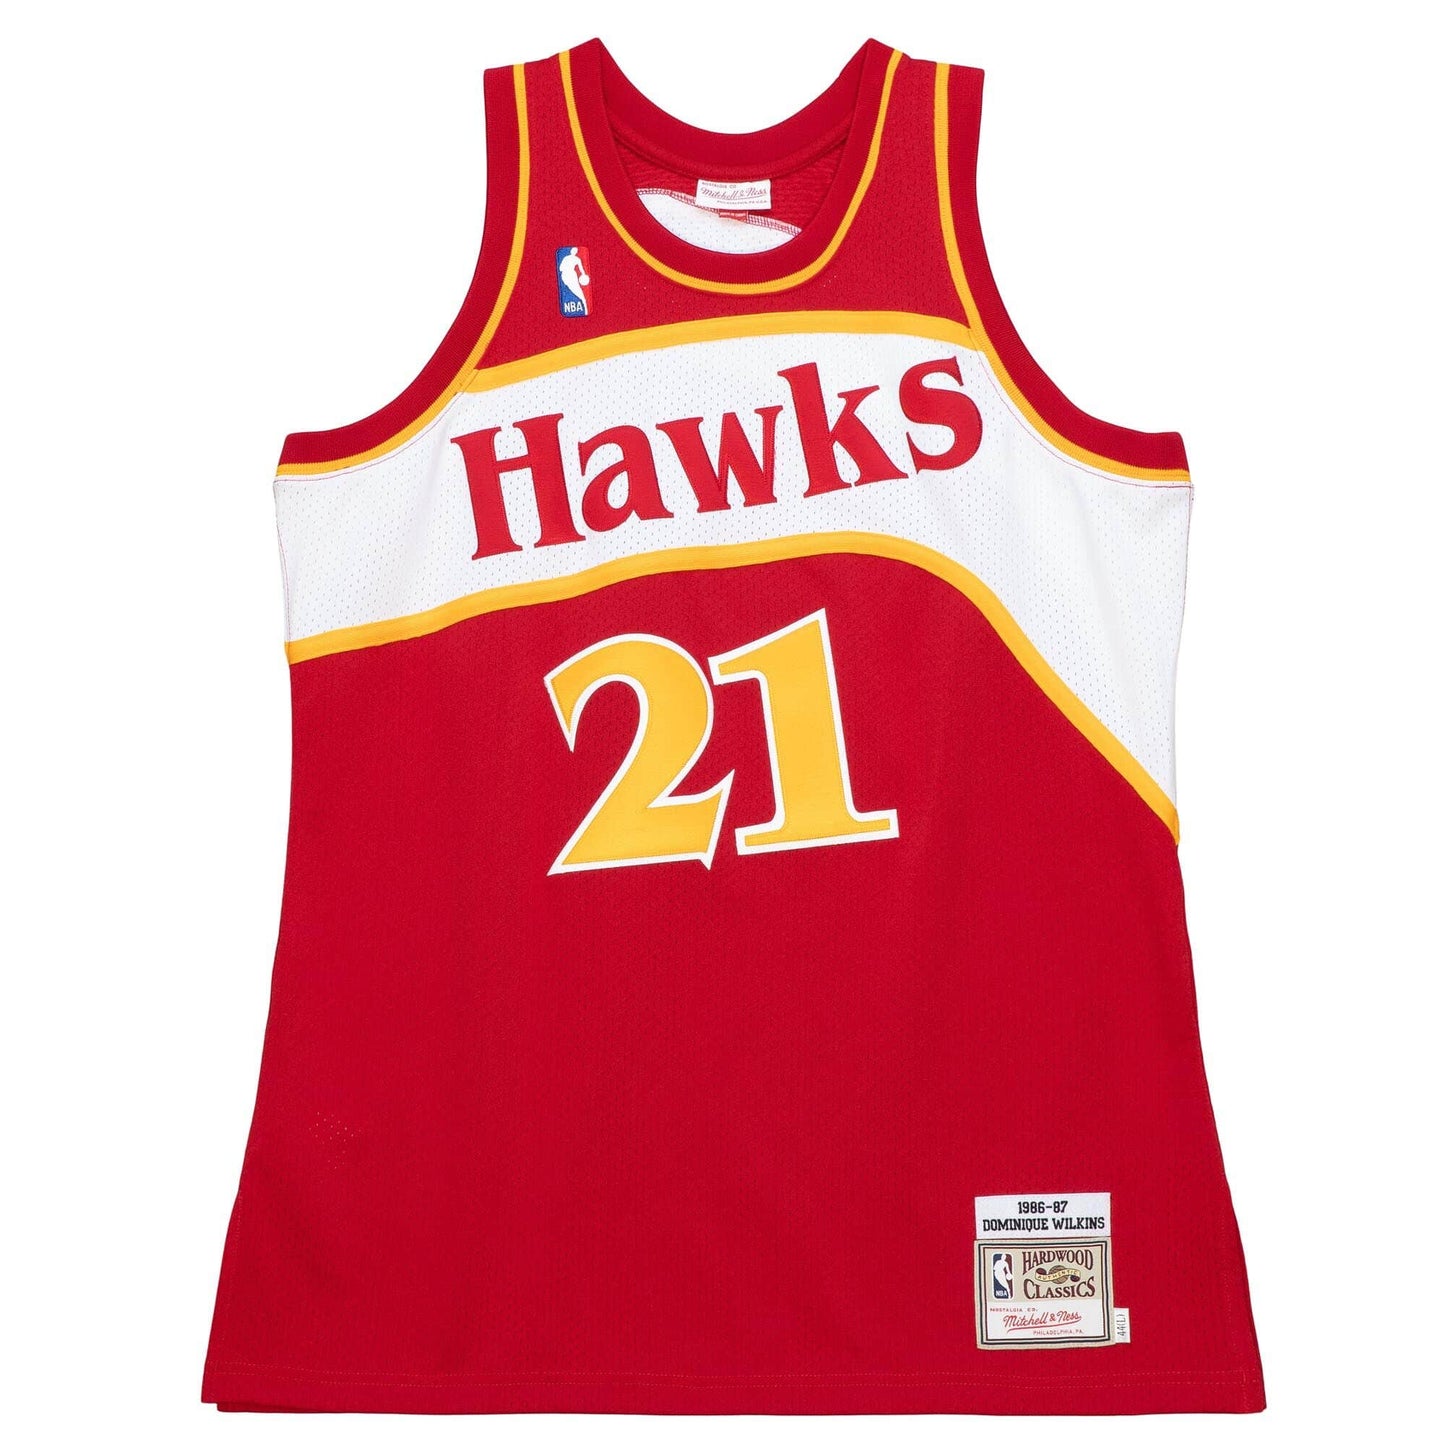 Authentic Dominique Wilkins Atlanta Hawks 1987-88 Jersey